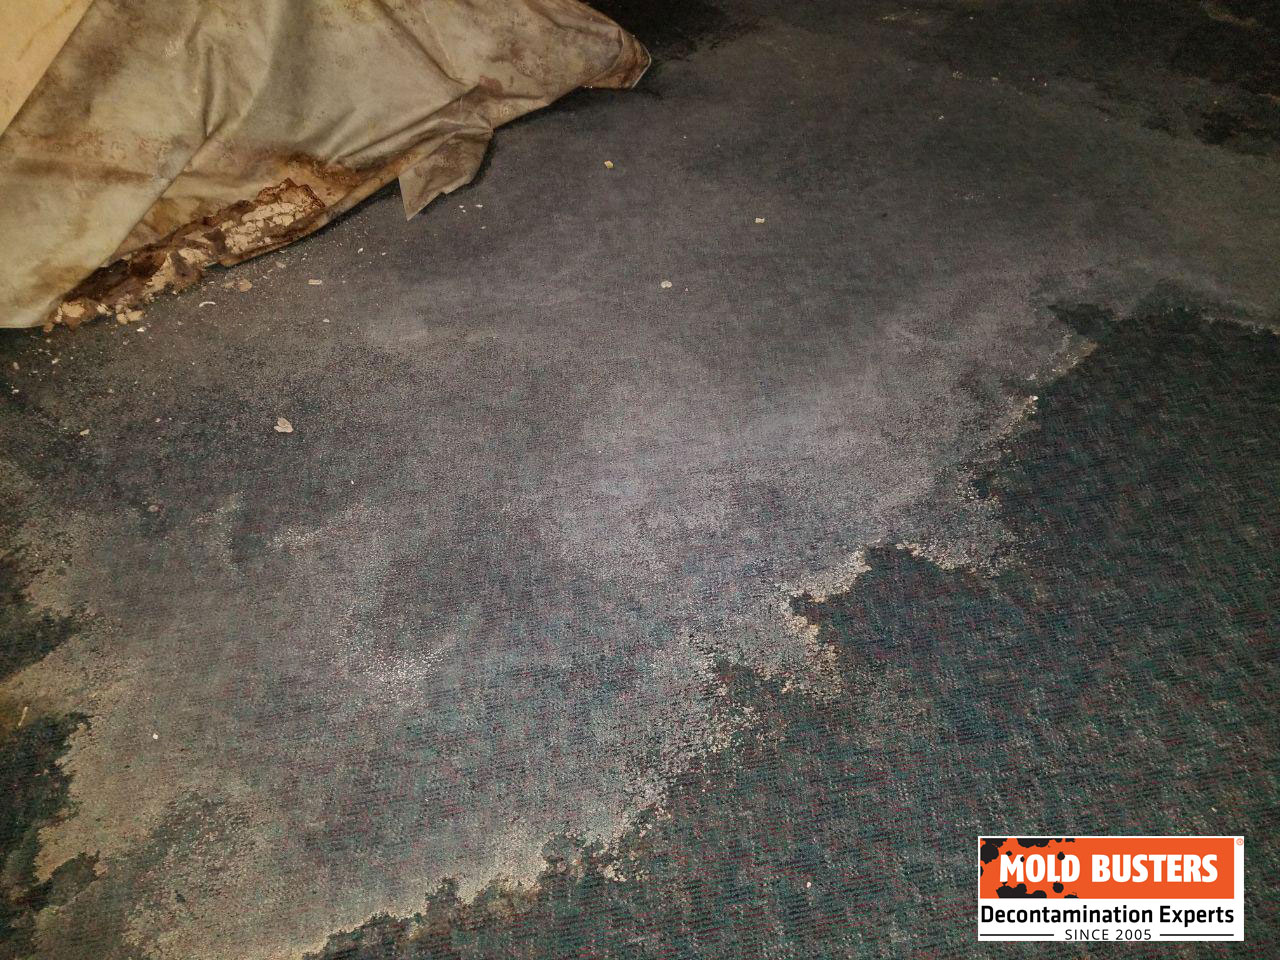 orange mold on carpet